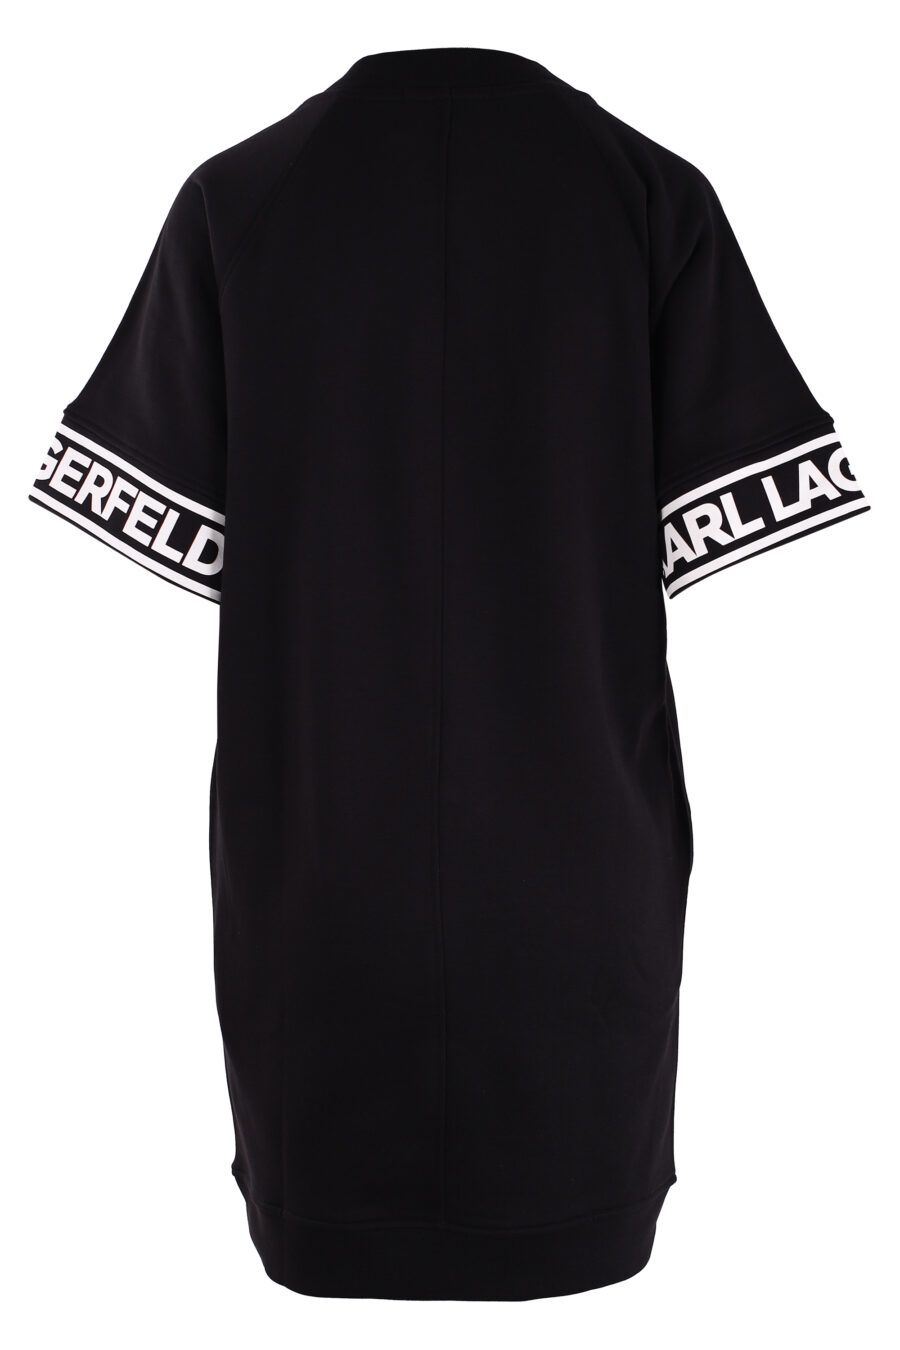 Black dress with logo on sleeves - IMG 3051